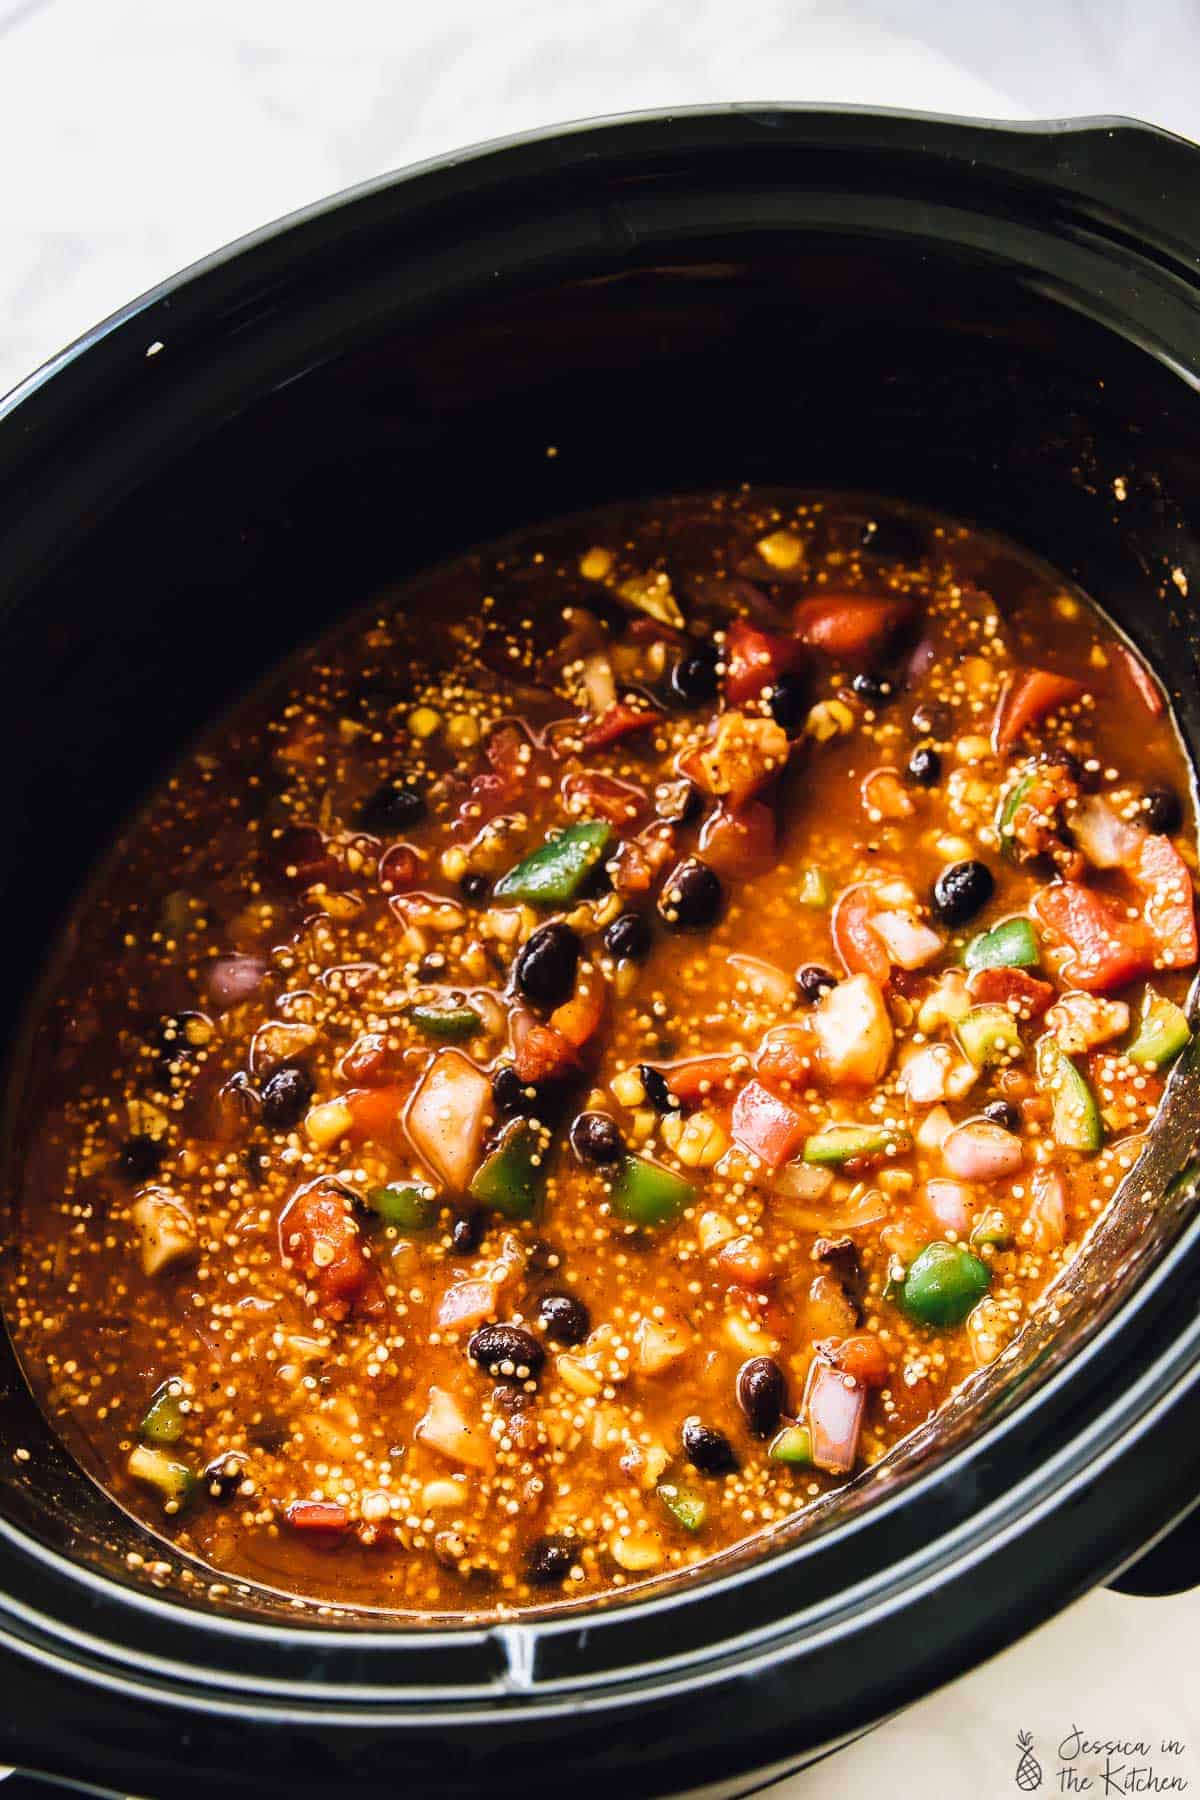 Slow cooker quinoa enchilada casserole in a black pot. 